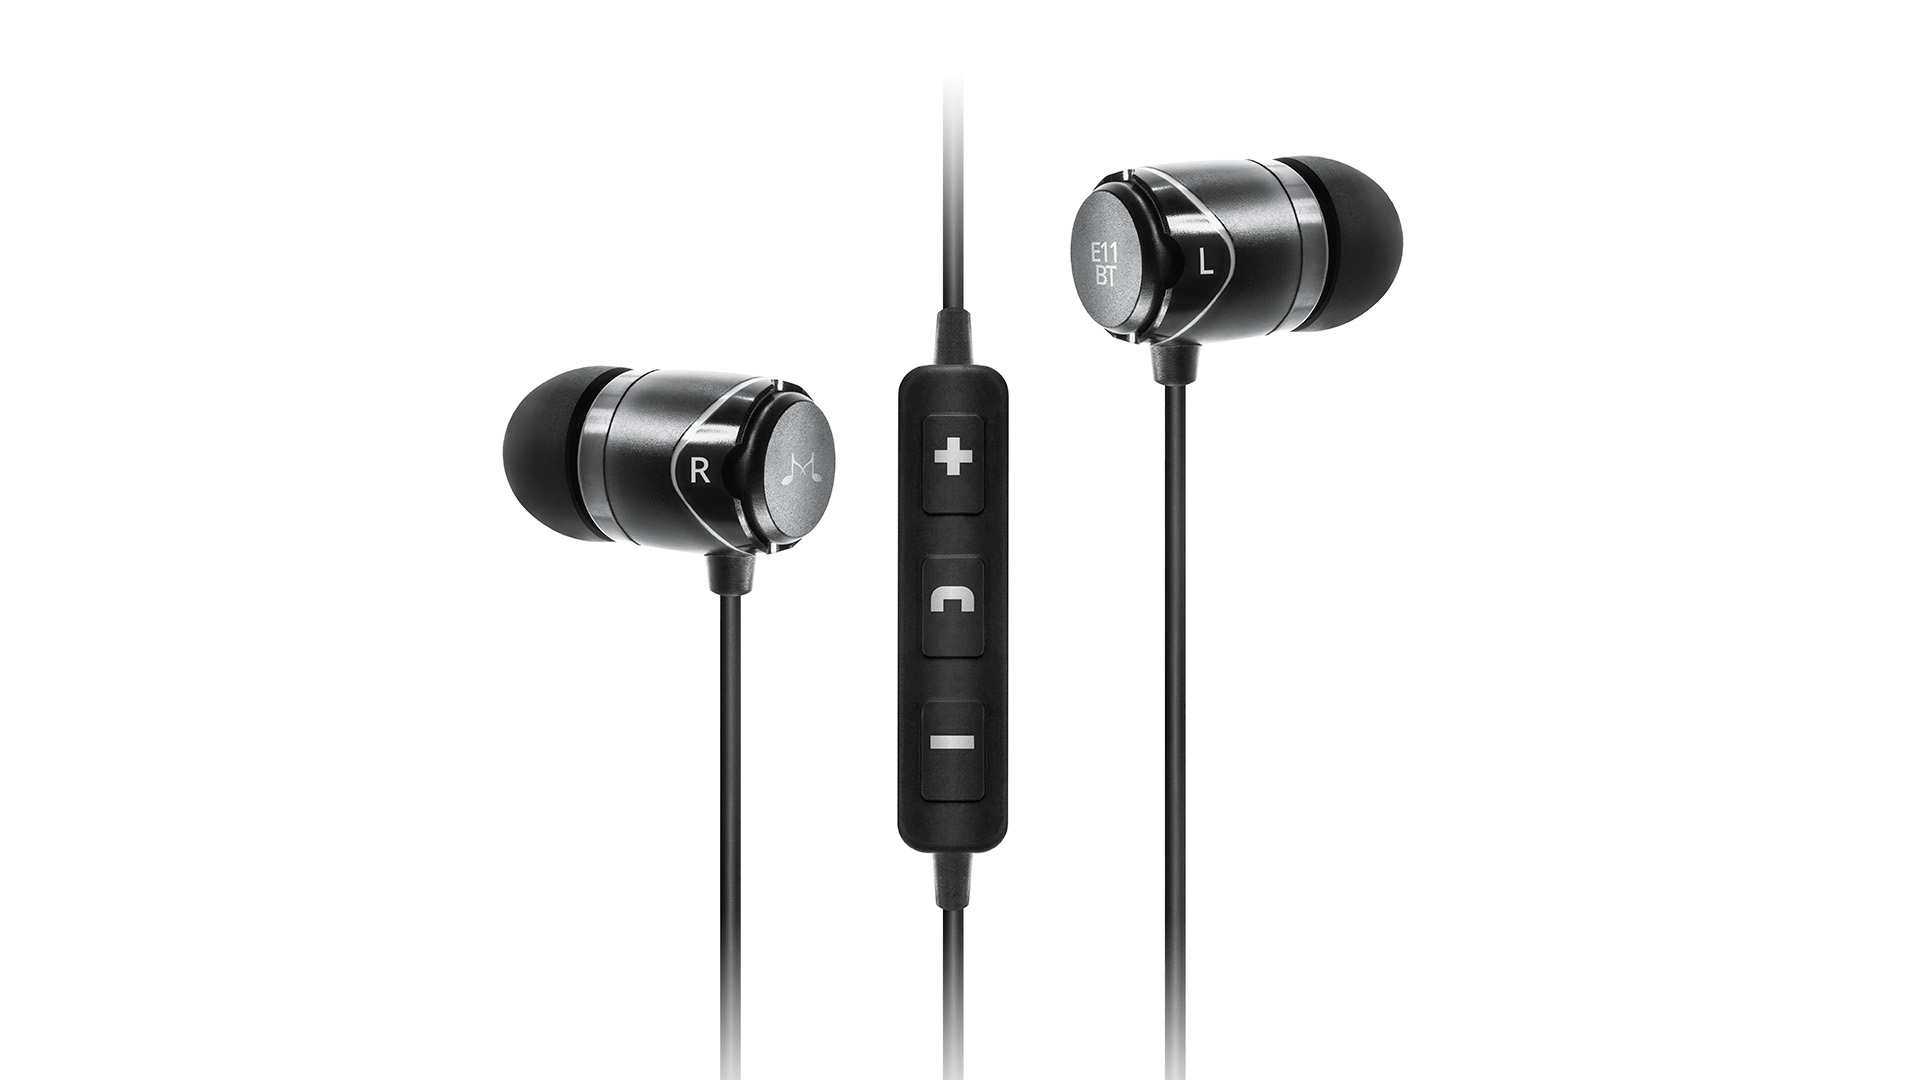 The Soundmagic e11bt wireless in-ear headphones on a white background.